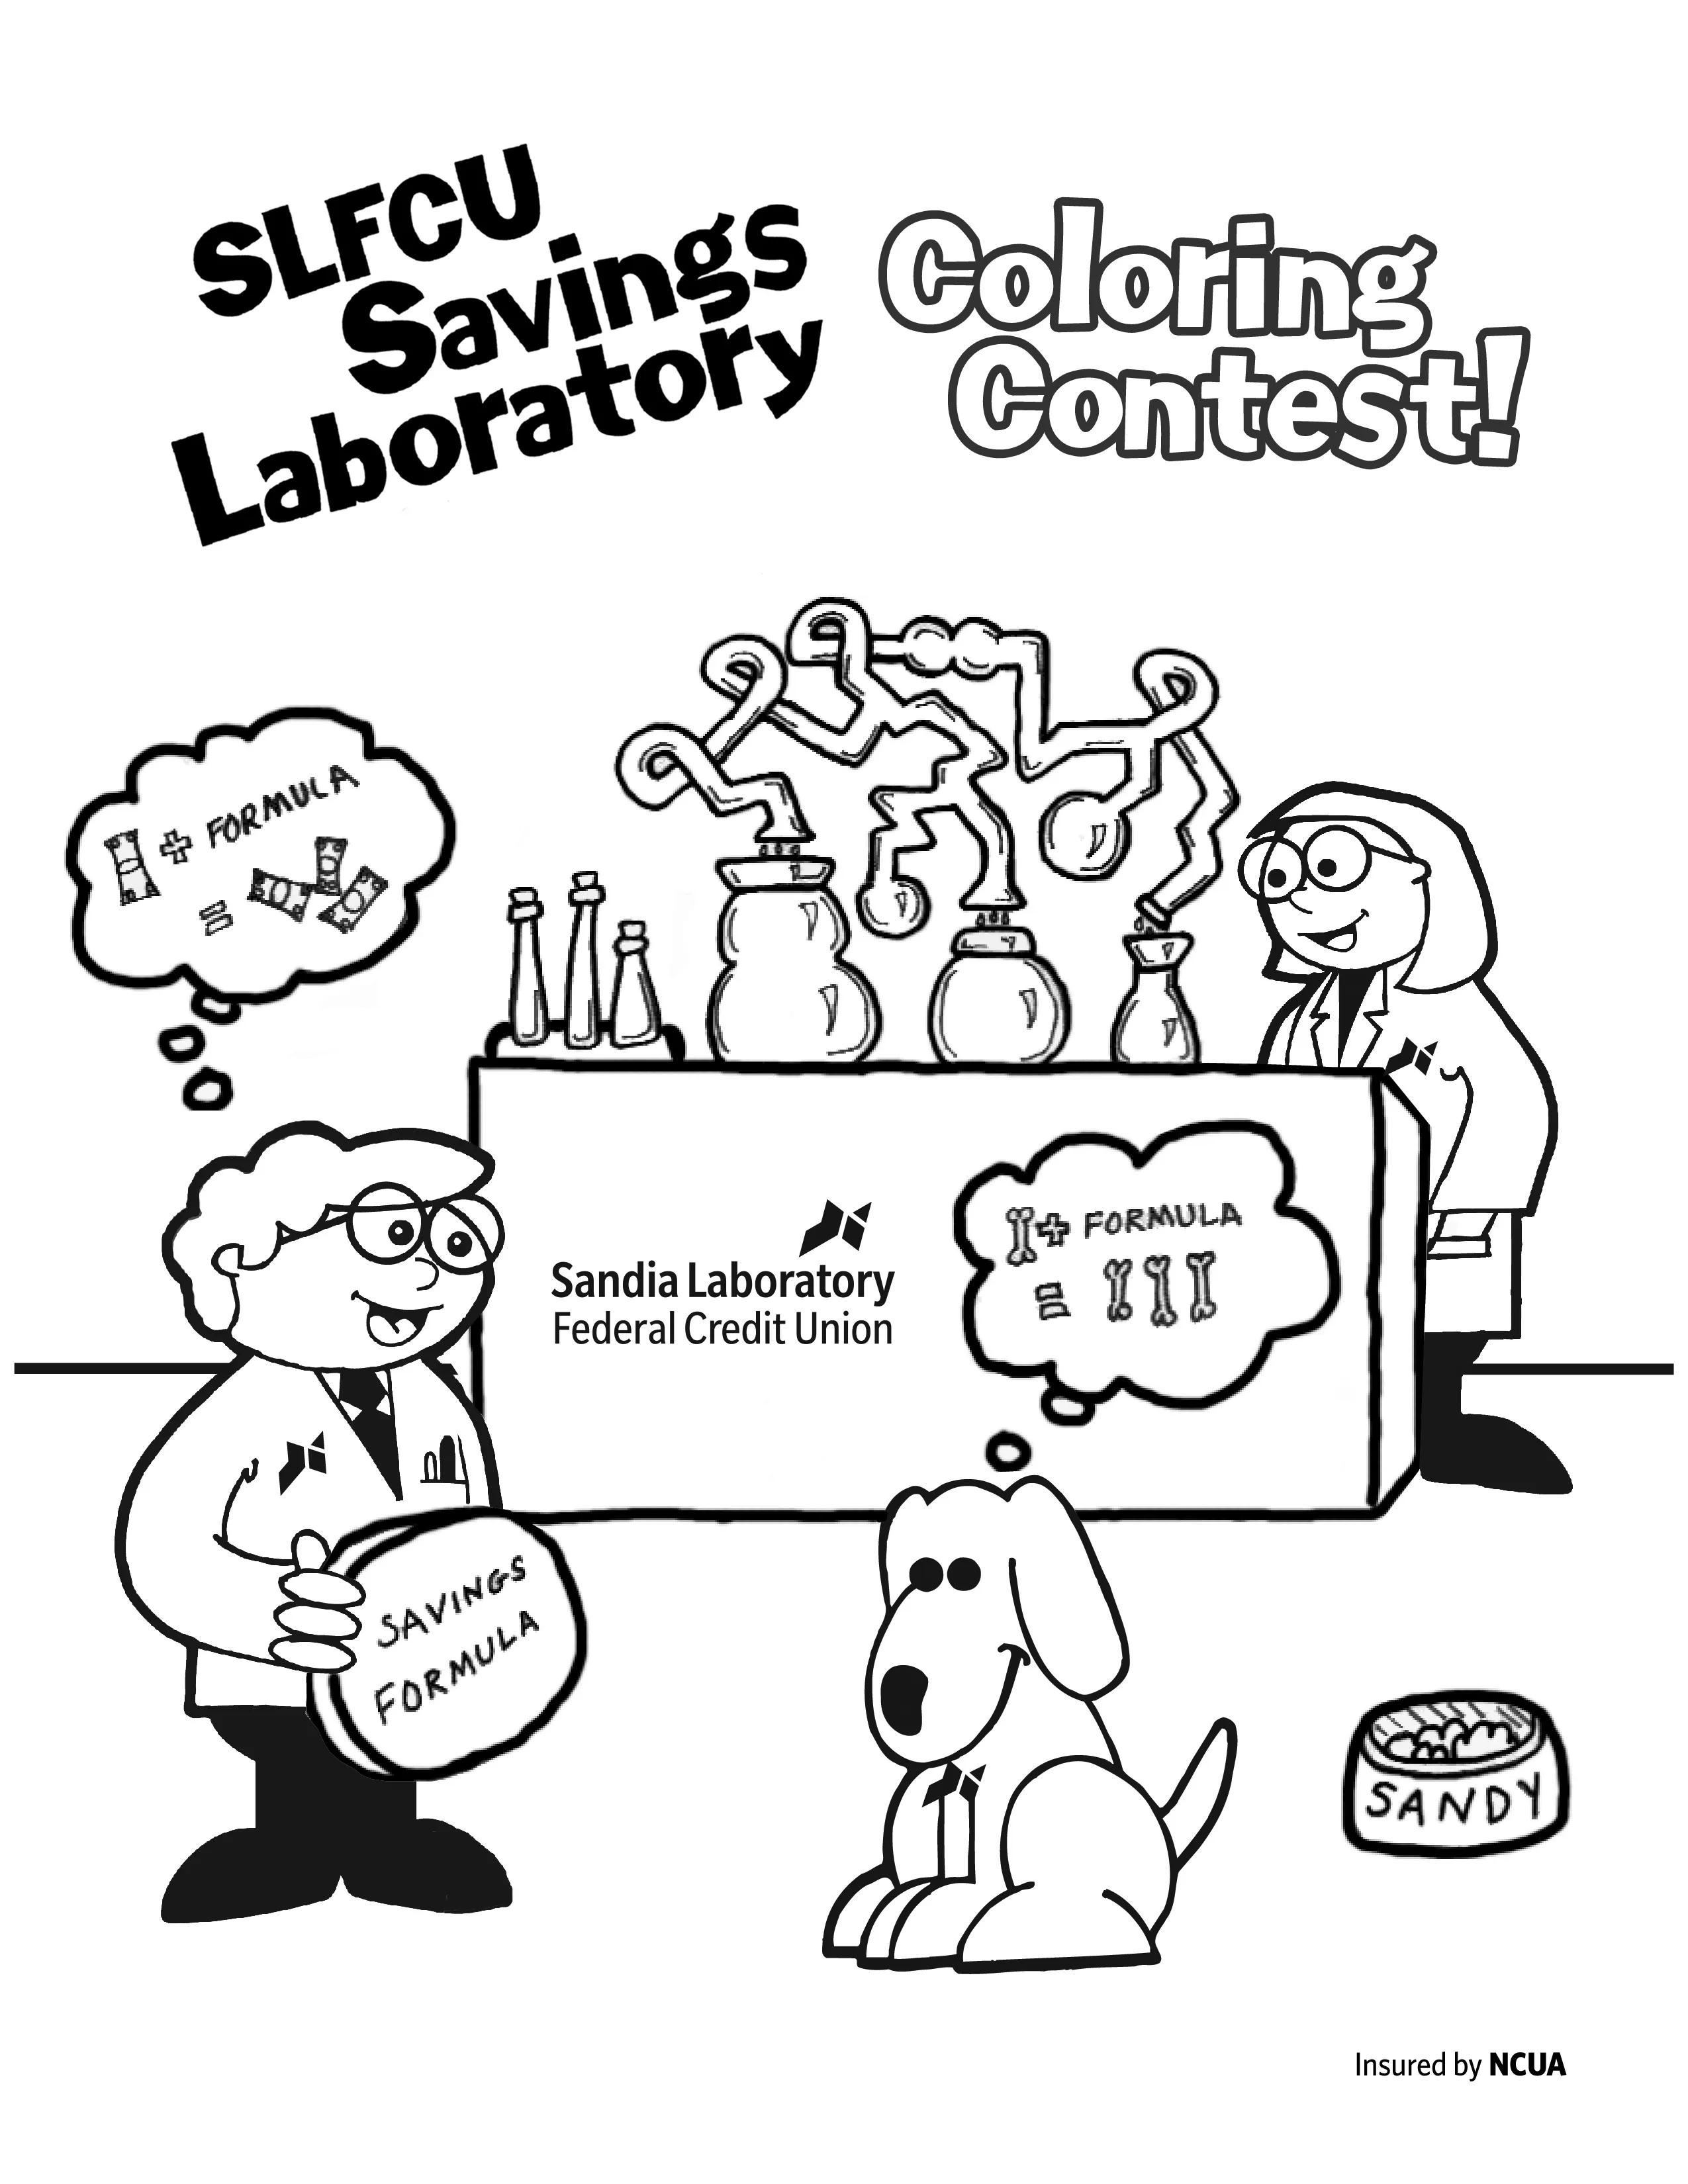 SLFCU Savings Laboratory Coloring Contest